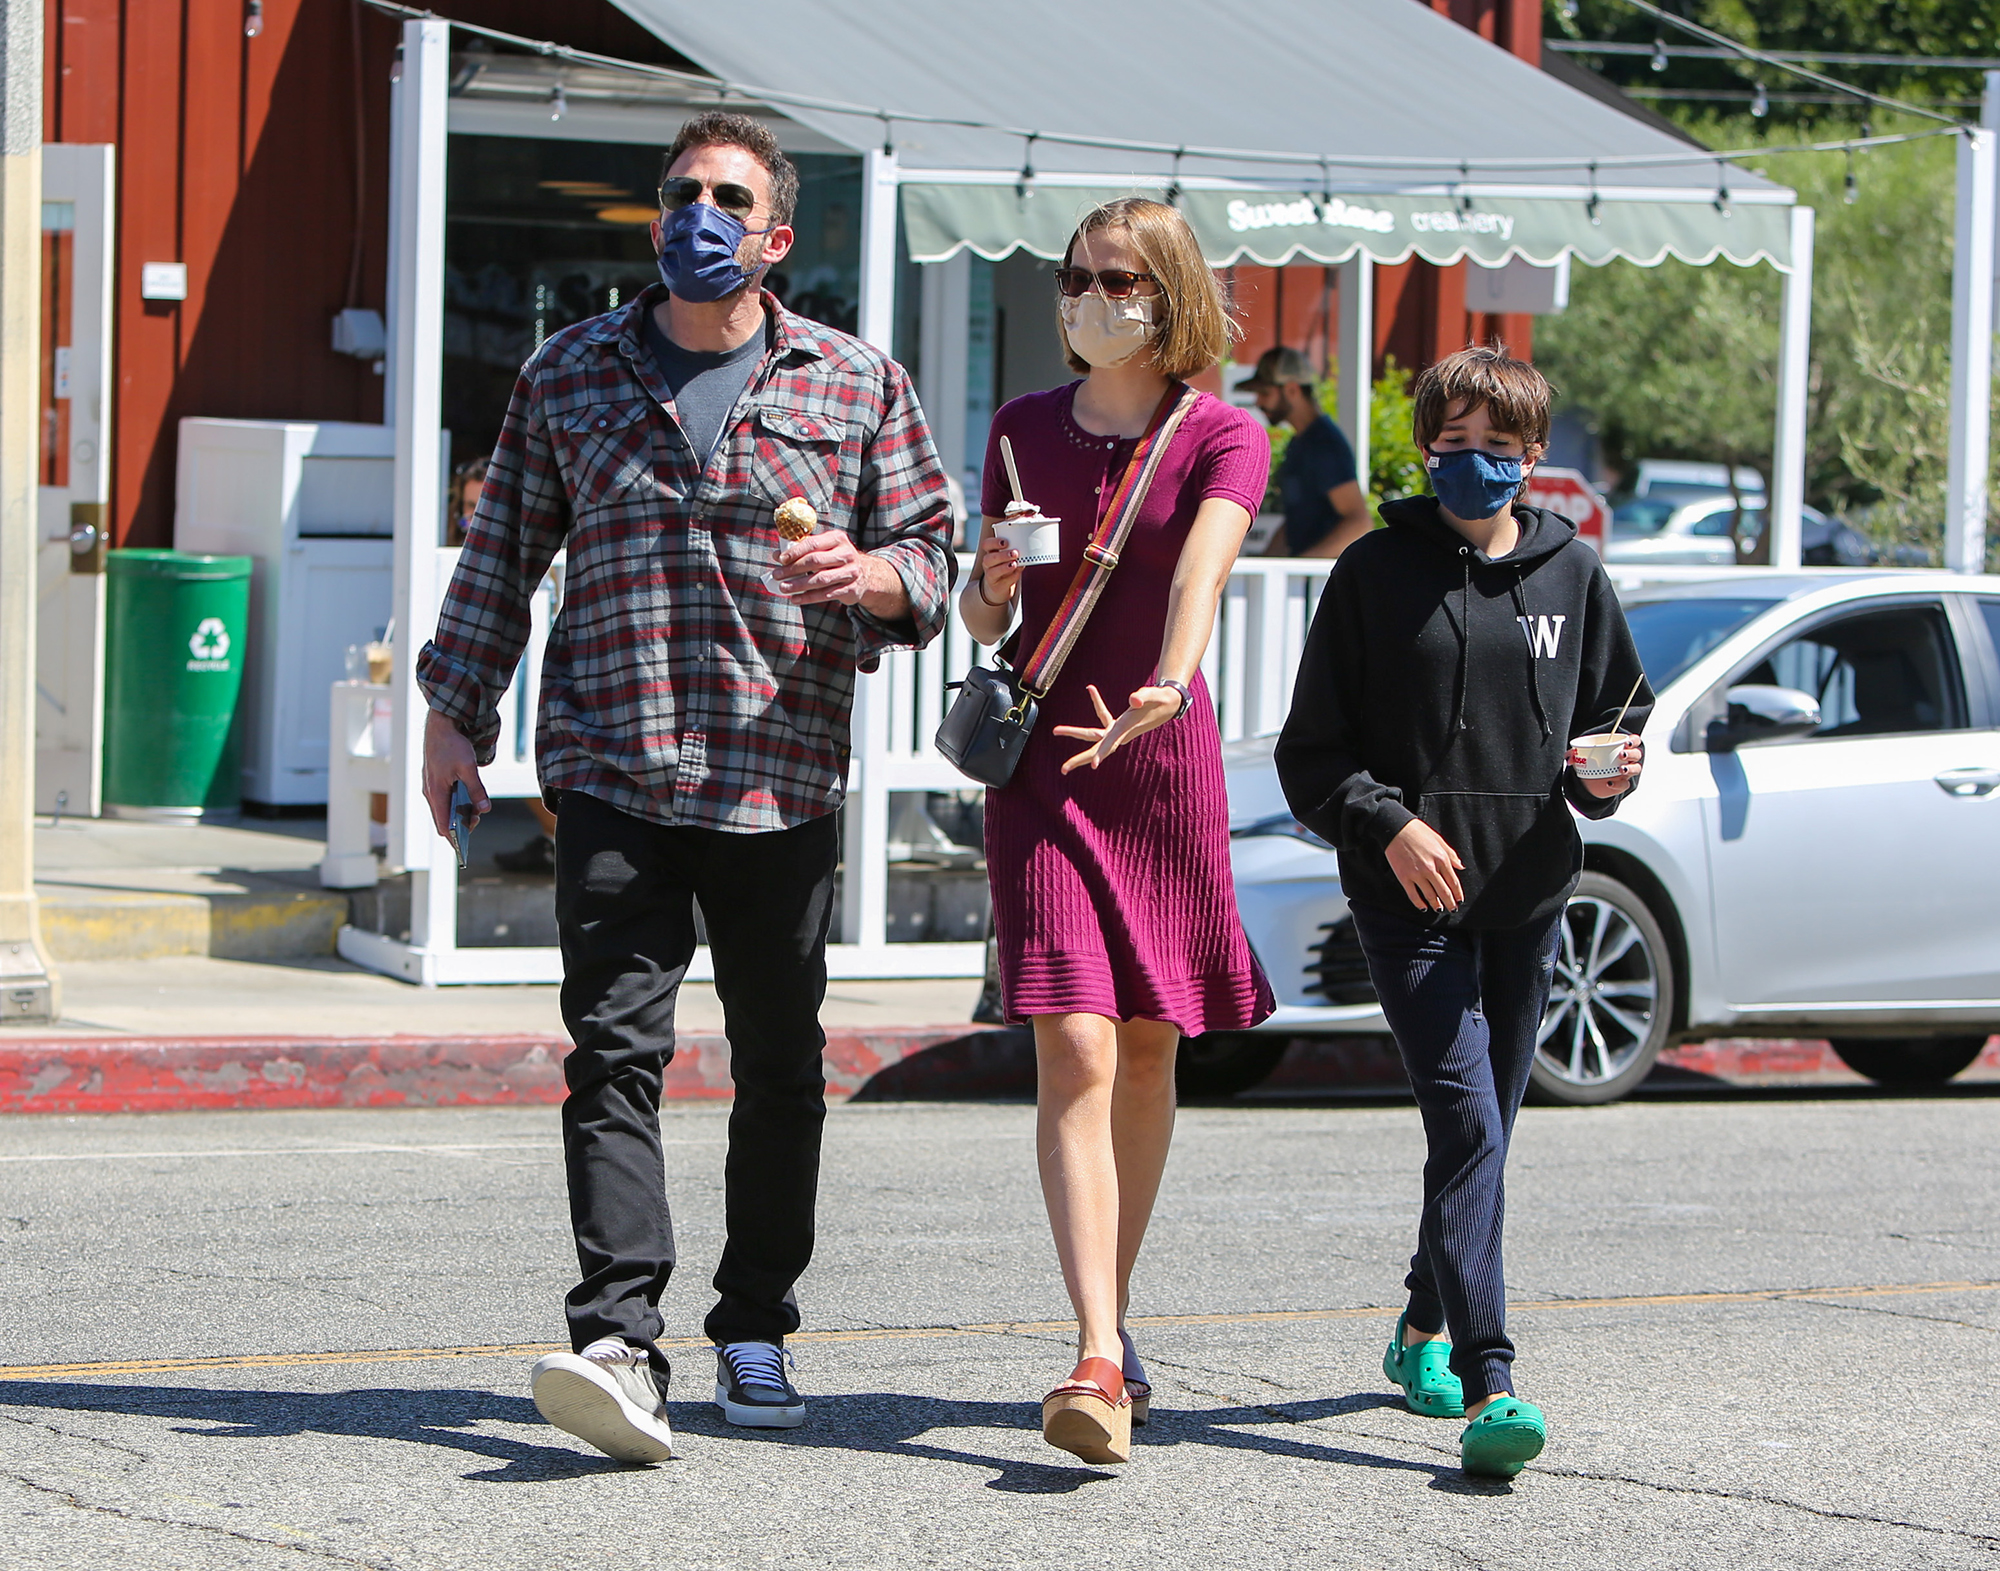 Ben Affleck takes his daughter Violet to Krispy Kreme on July 23, 2013